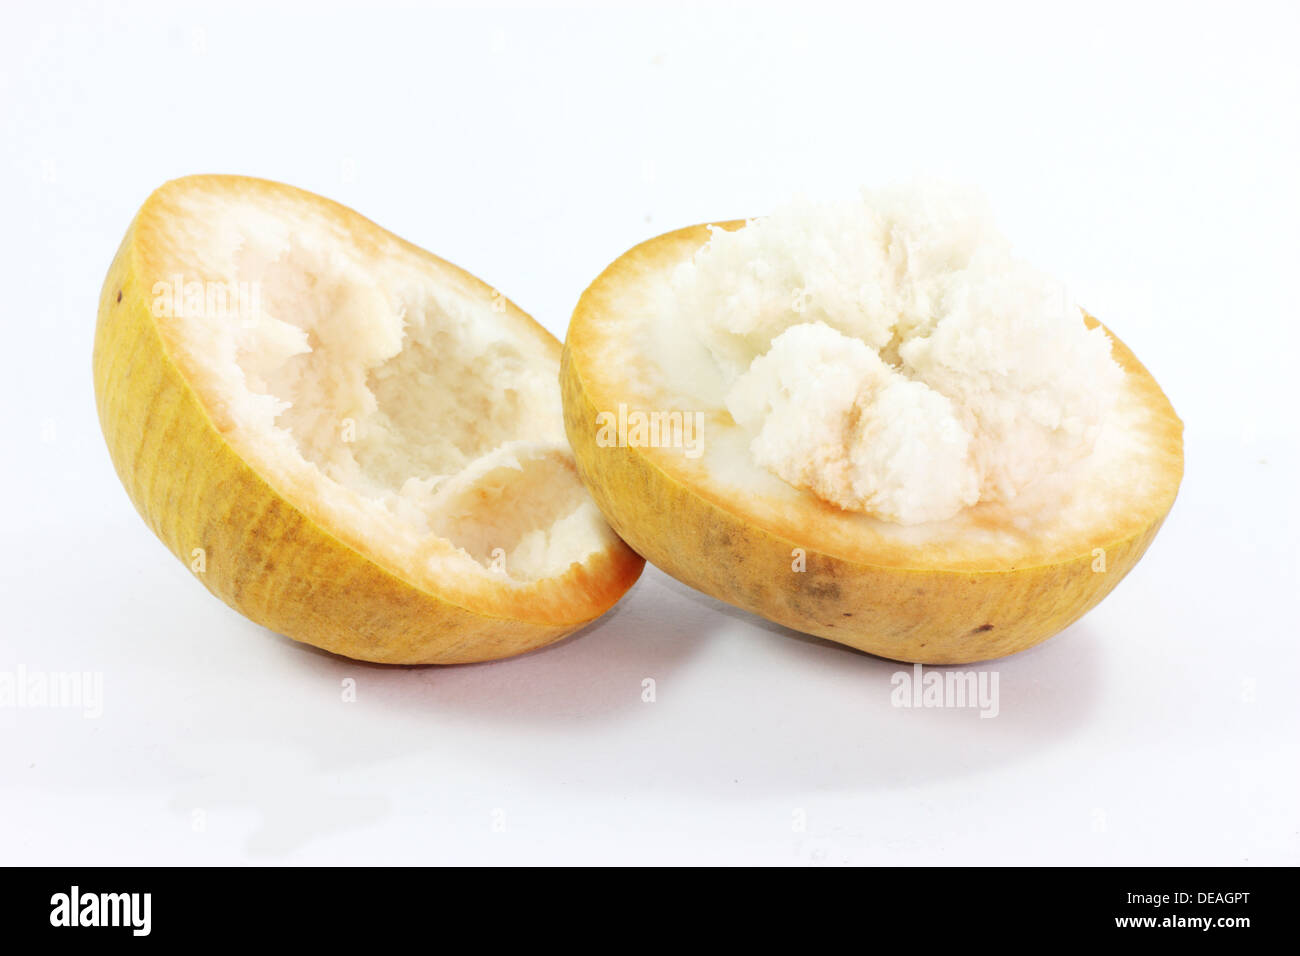 Fresh santol fruit Binomial name sandoricum koetjape Species S. koetjape isolated on white background Stock Photo